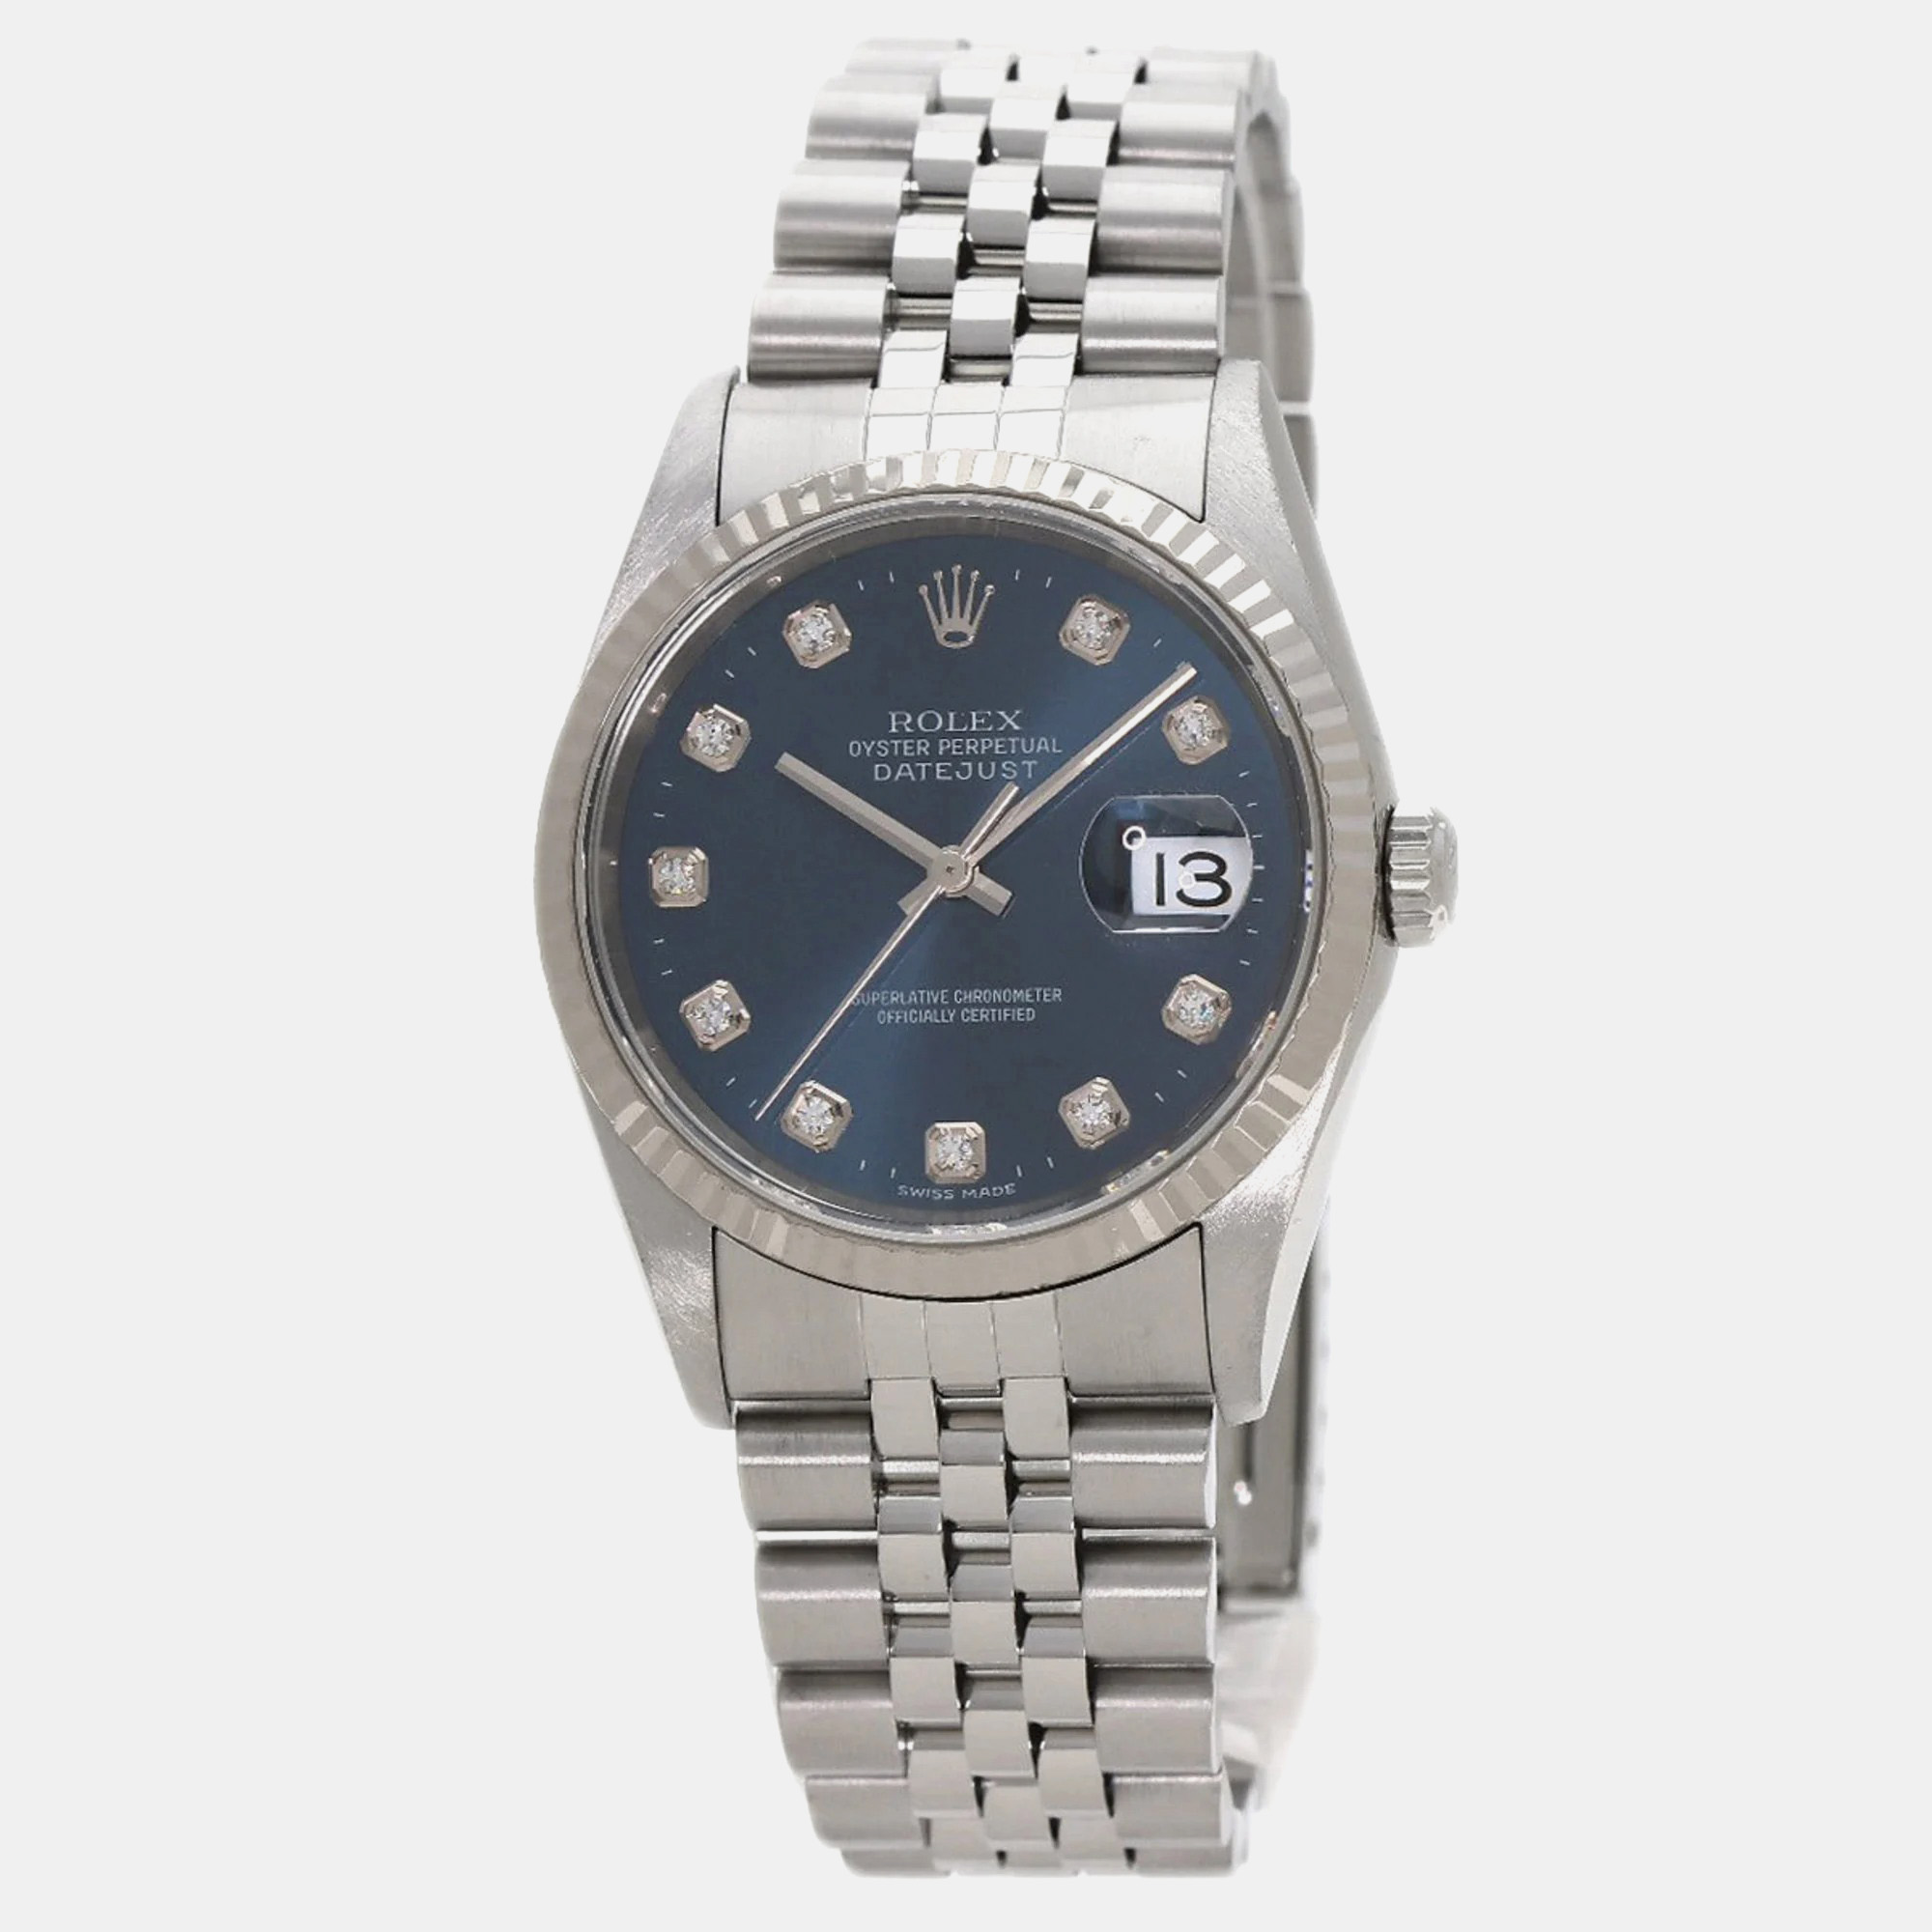 Rolex blue diamond 18k white gold stainless steel datejust 16234 automatic men's wristwatch 36 mm